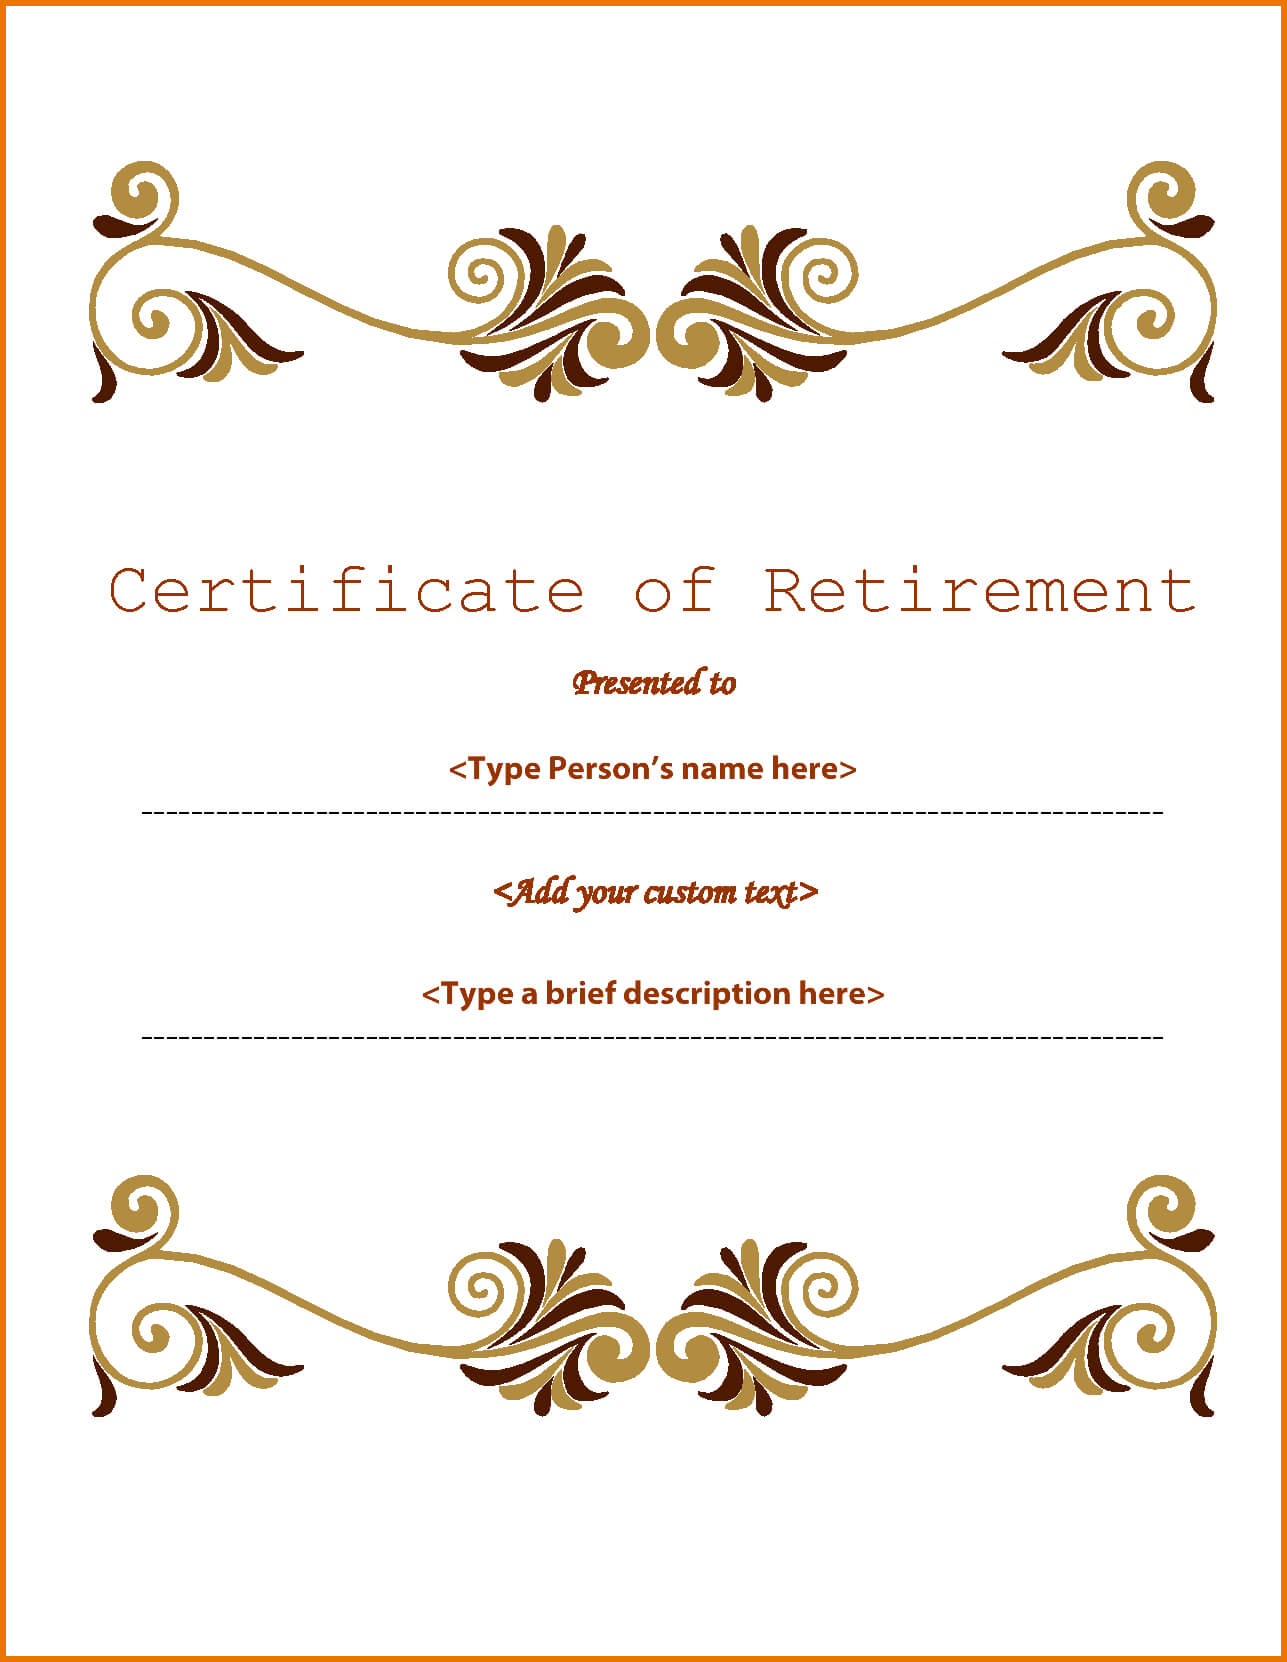 Retirement Certificate Template.65840807 | Scope Of Work Within Retirement Certificate Template